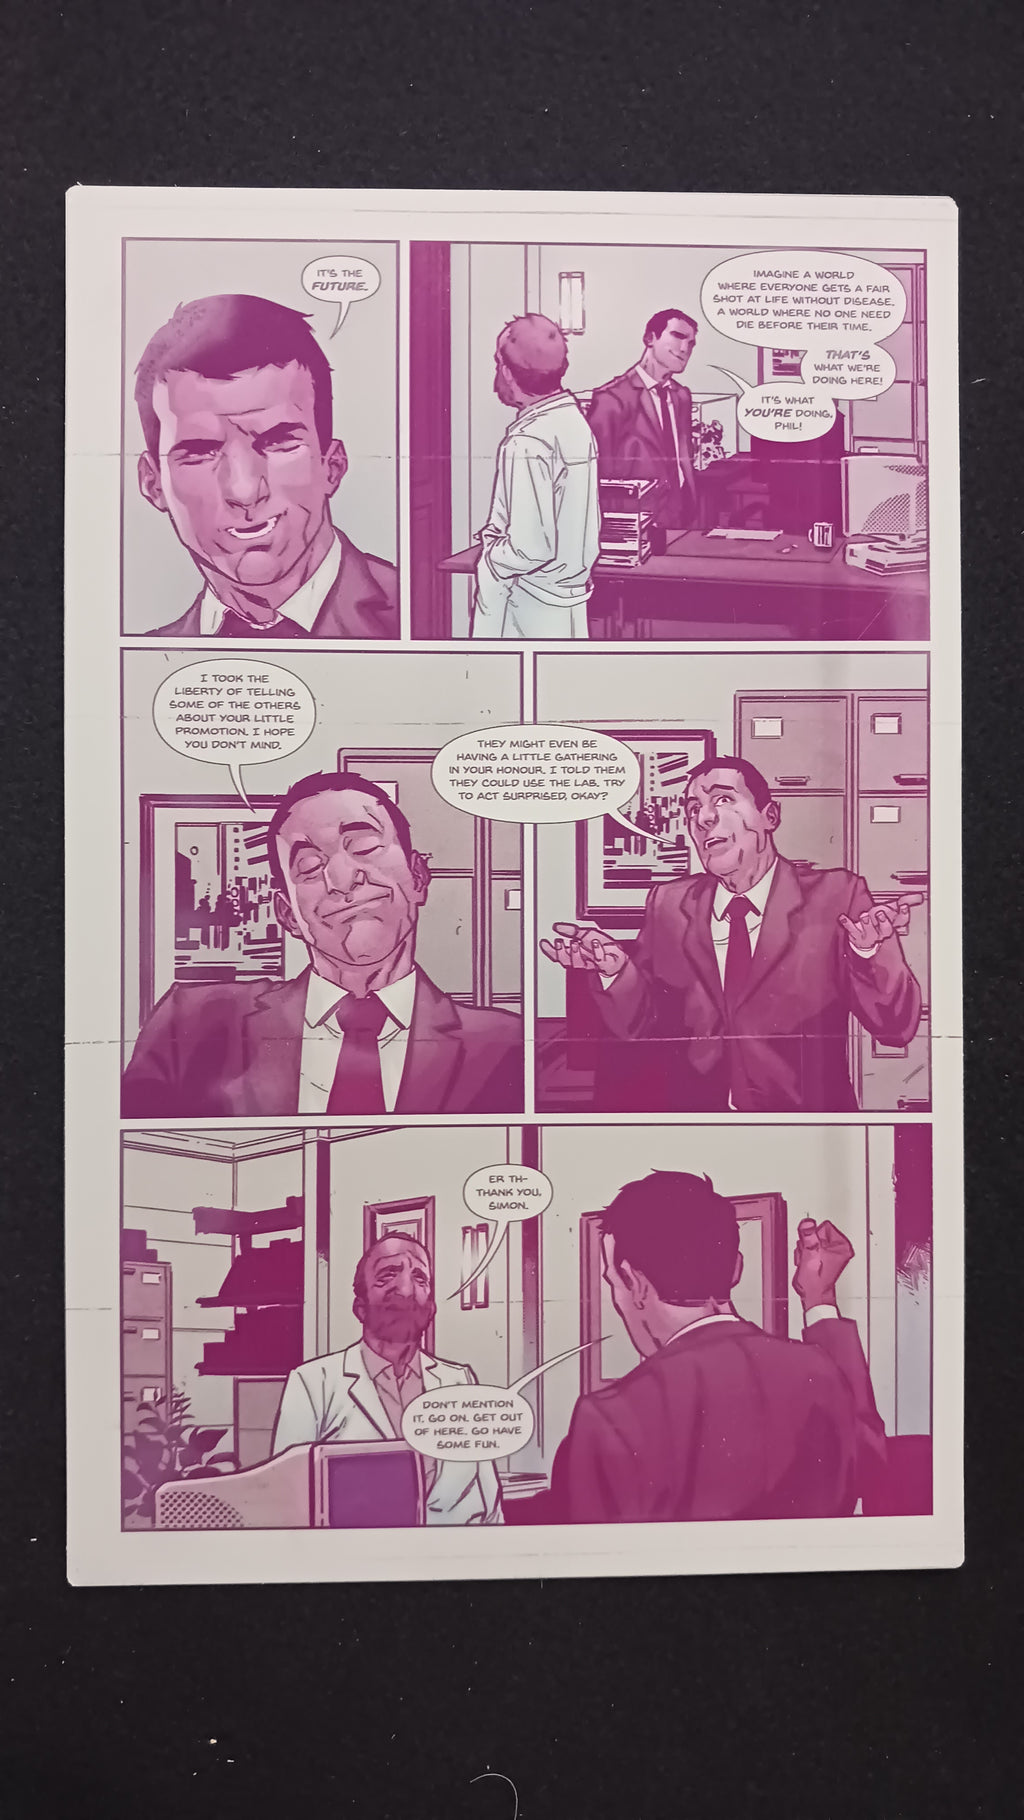 Category Zero Conflict #4 - Page 2 - PRESSWORKS - Comic Art - Printer Plate - Magenta